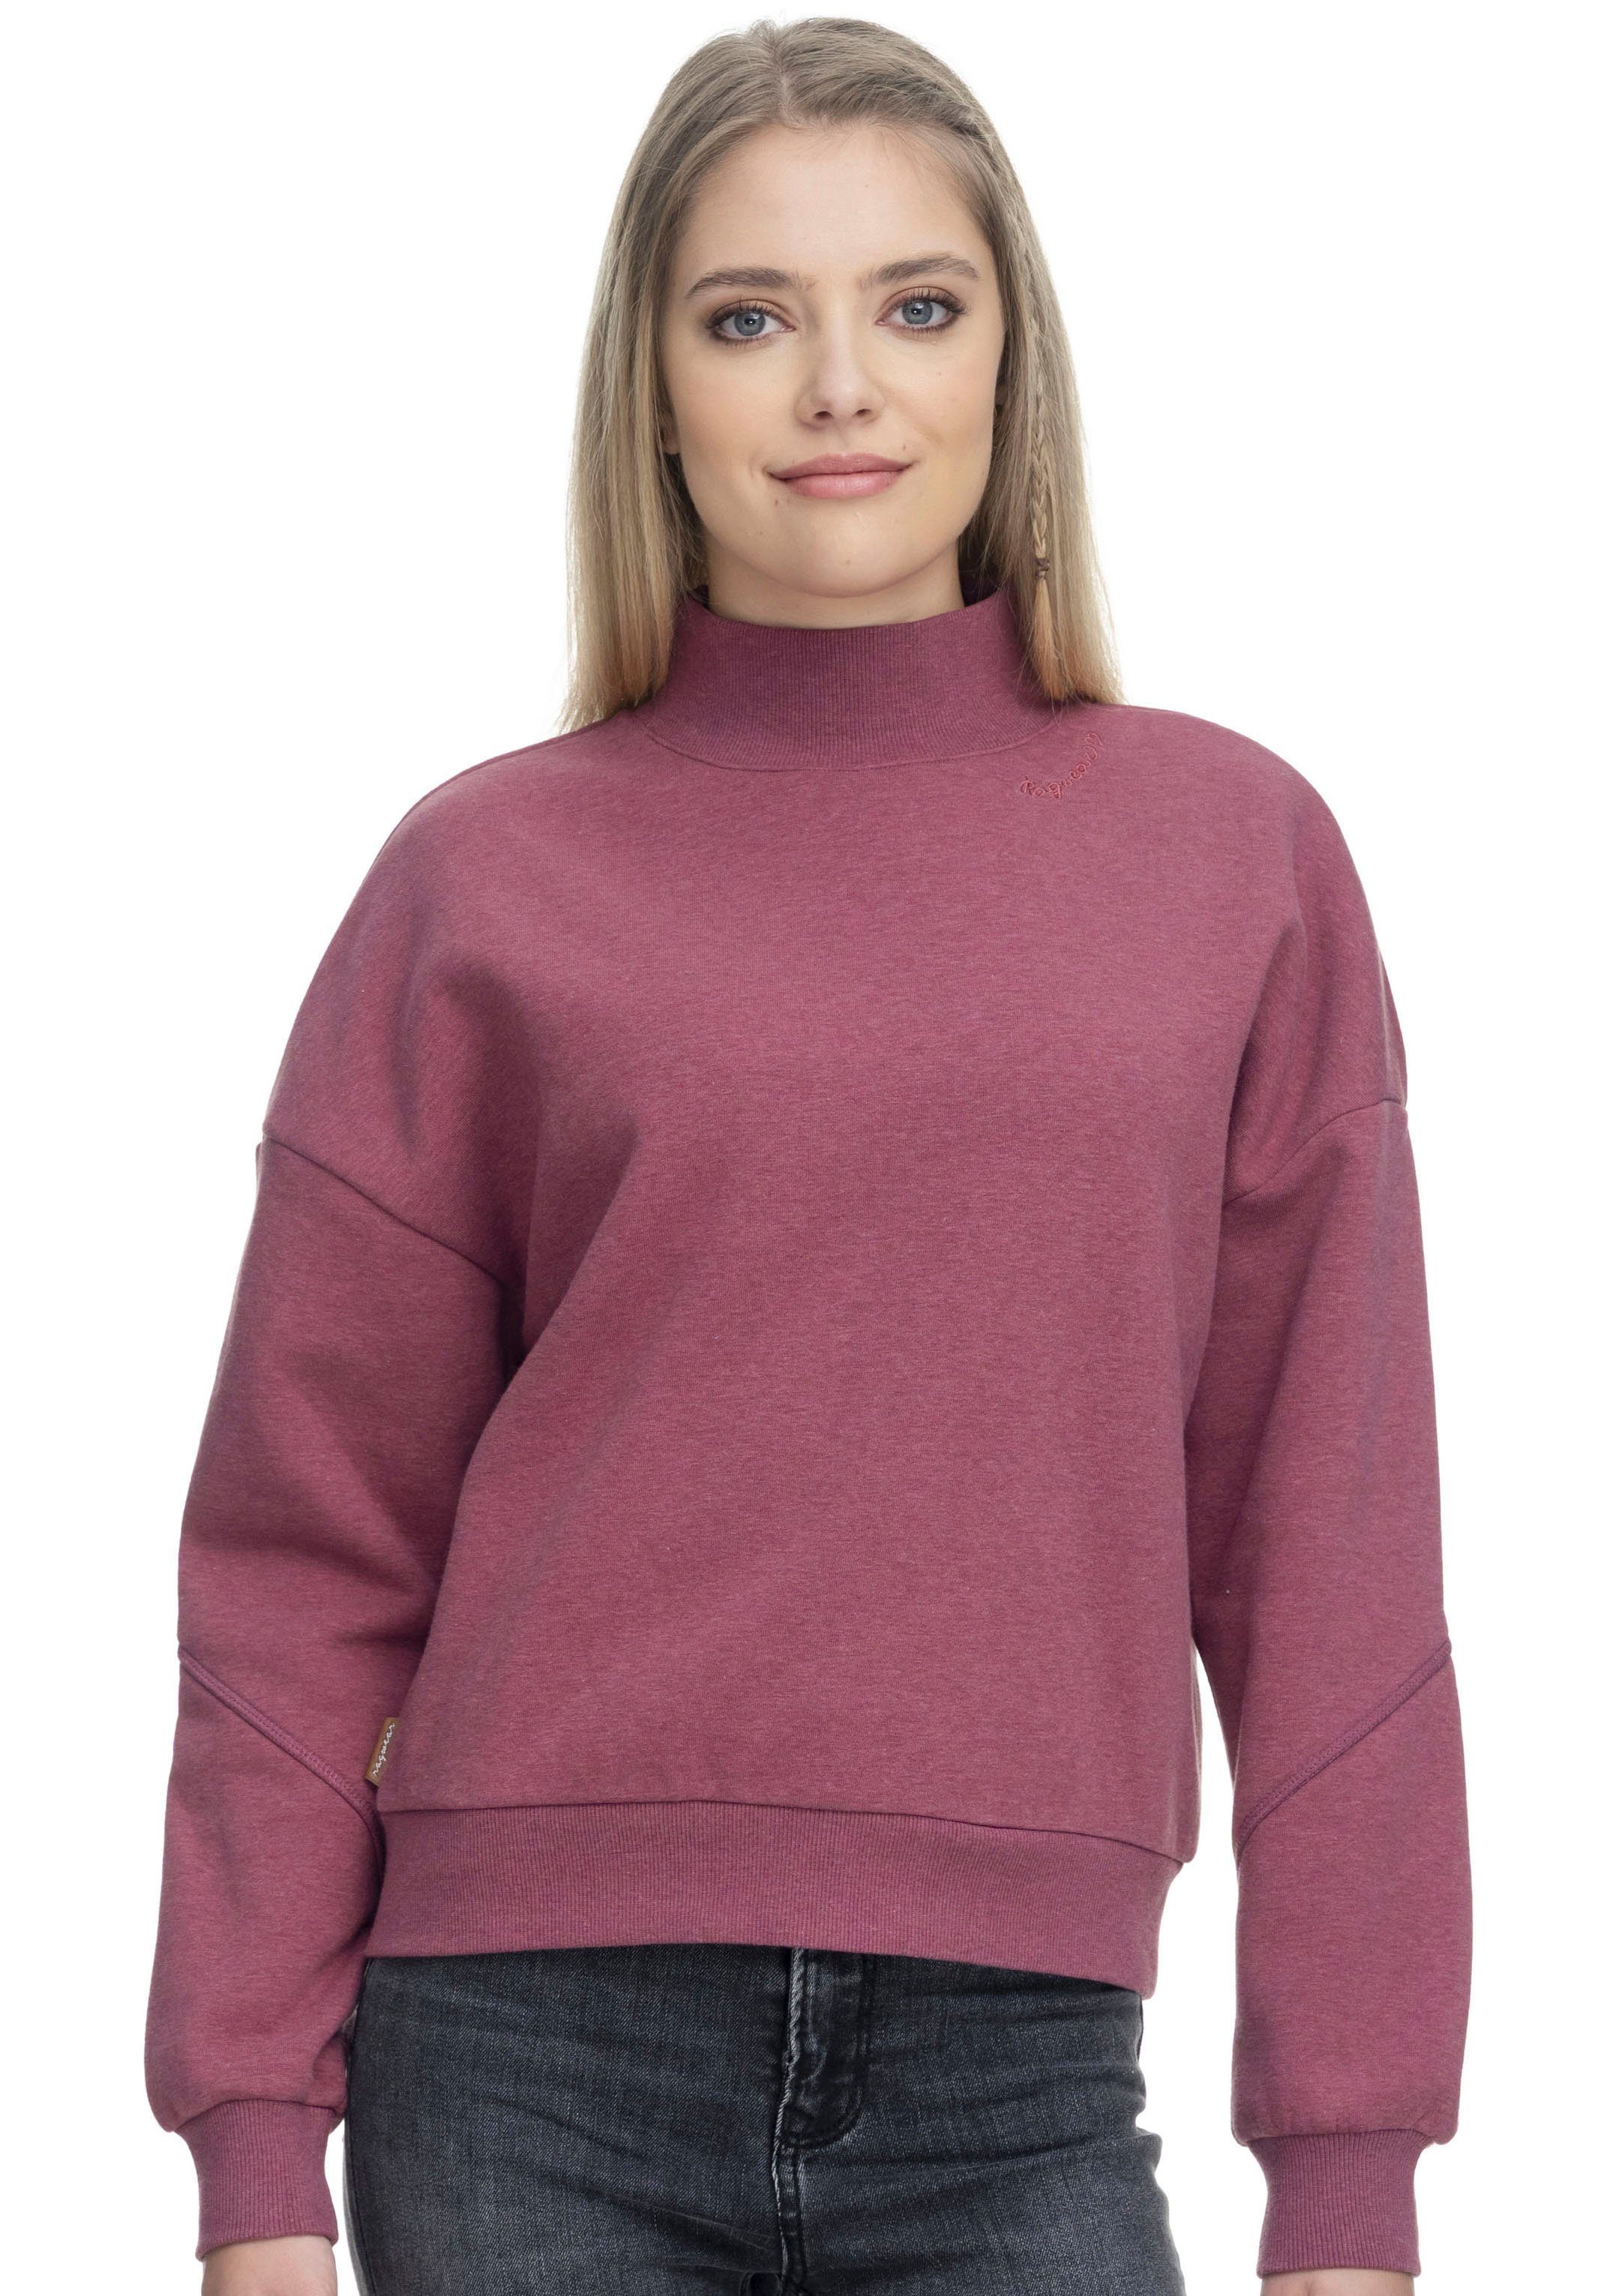 SWEAT plum Ragwear KAILA 2030 Sweater